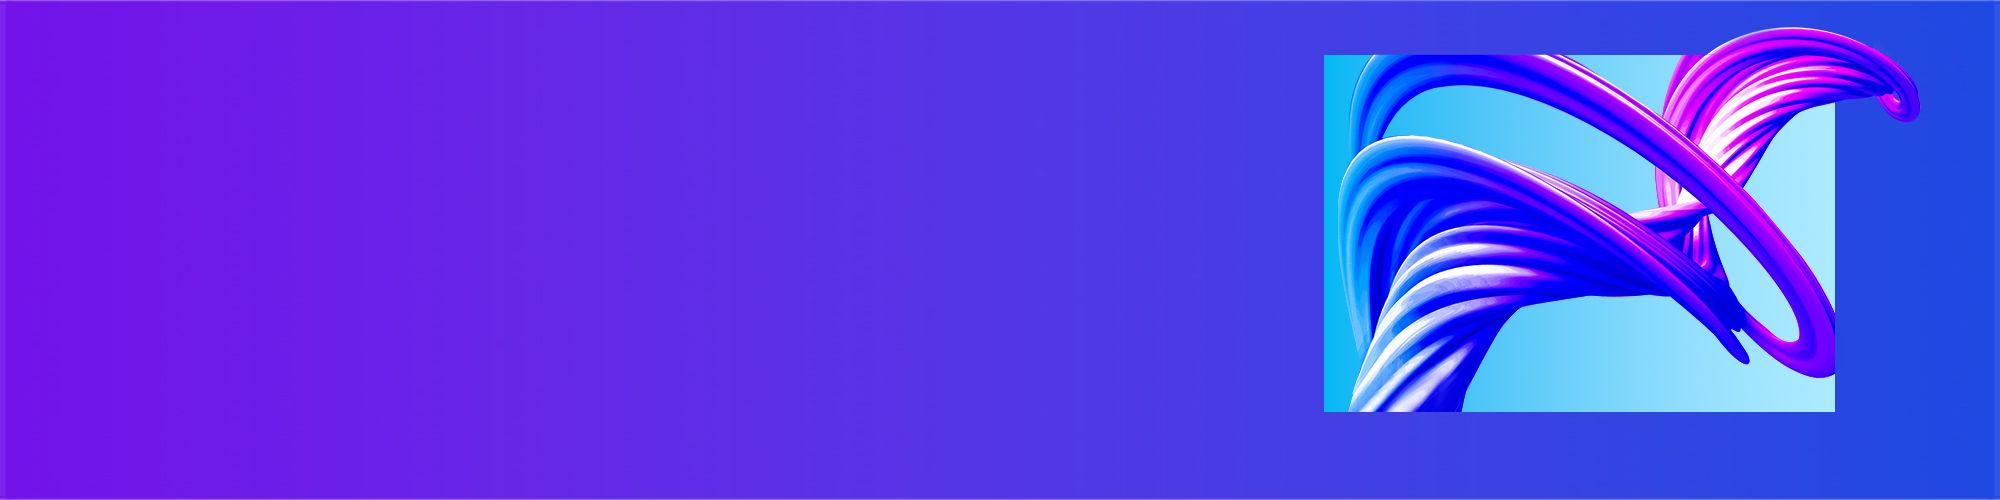 blue purple swirly abstract